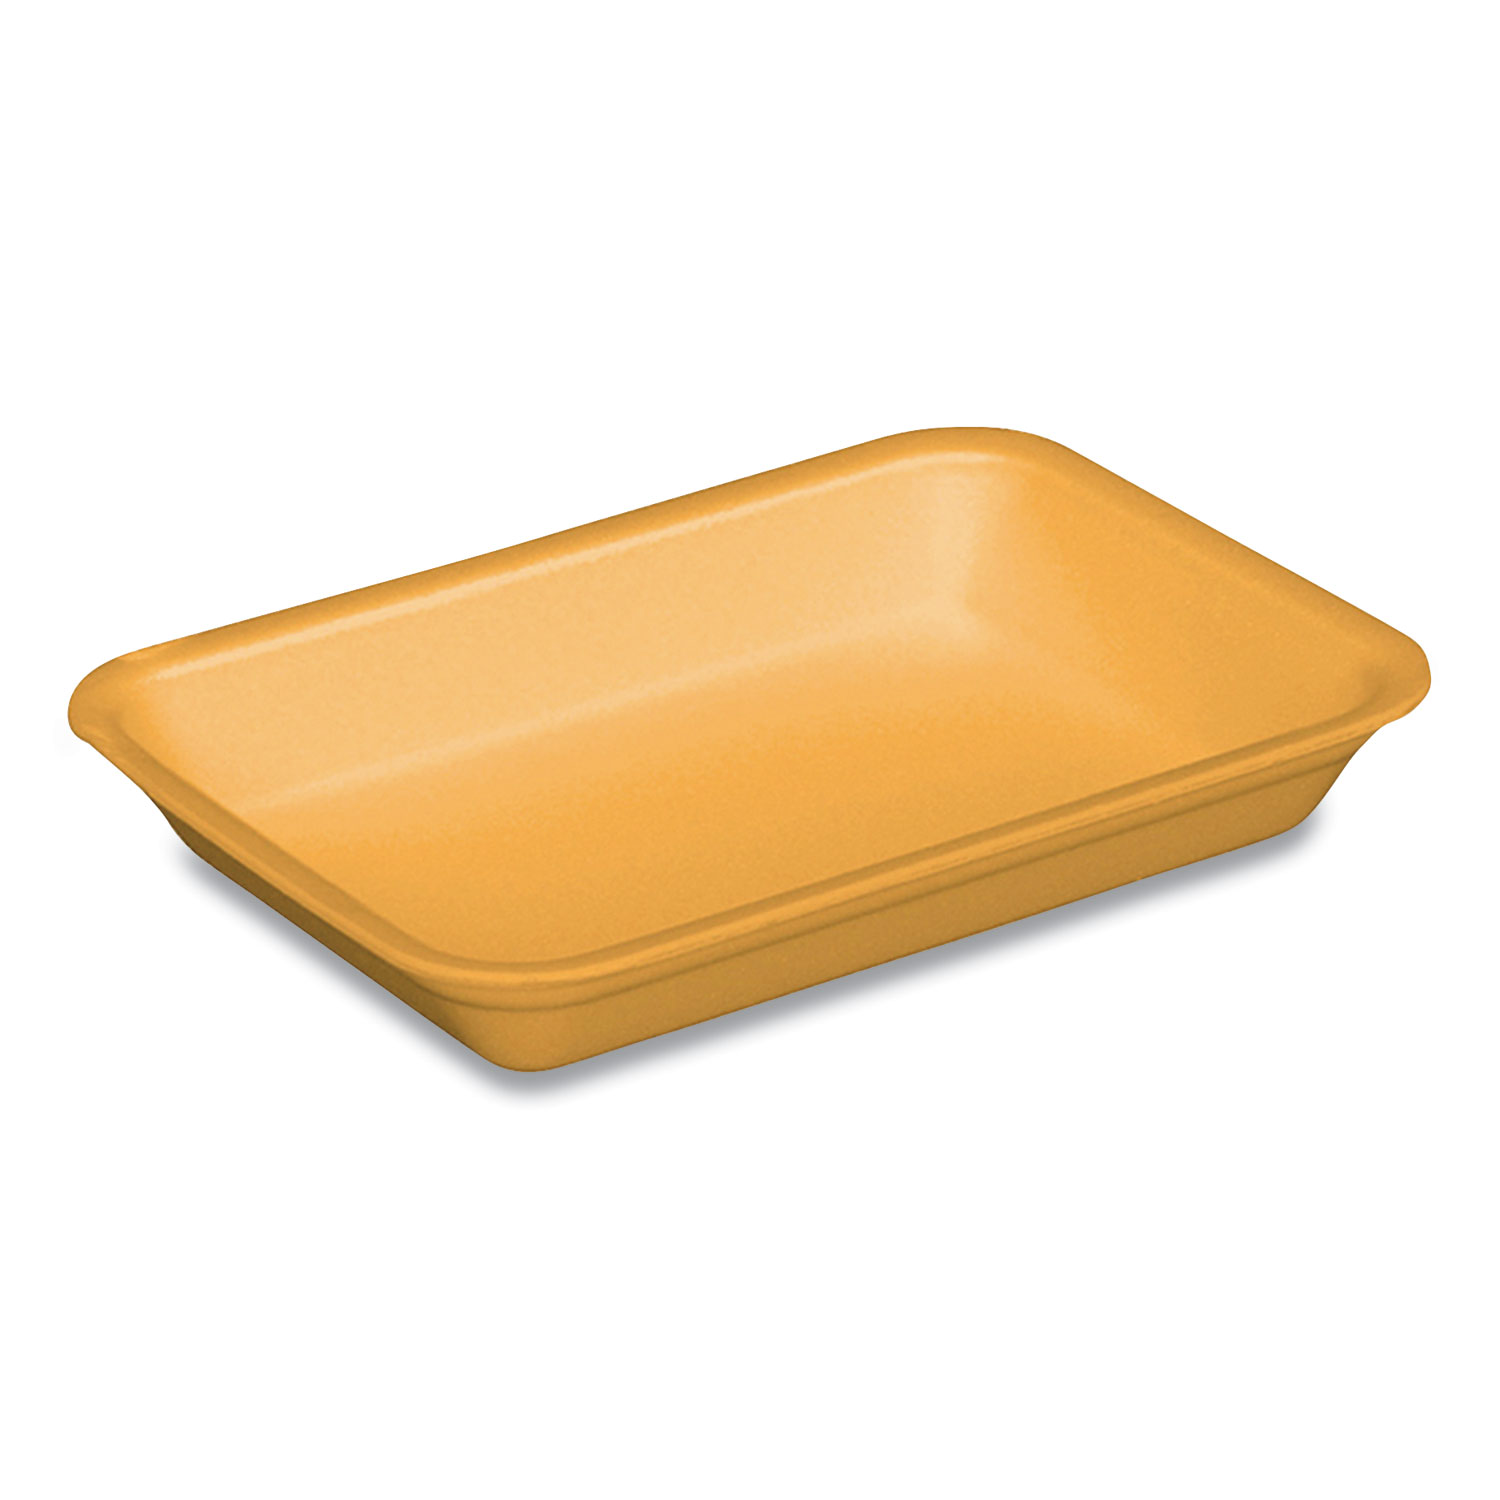  Pactiv 51P304D Supermarket Trays, #4D, 8.63 x 6.56 x 1.27, Yellow, 400/Carton (PCT51P304D) 